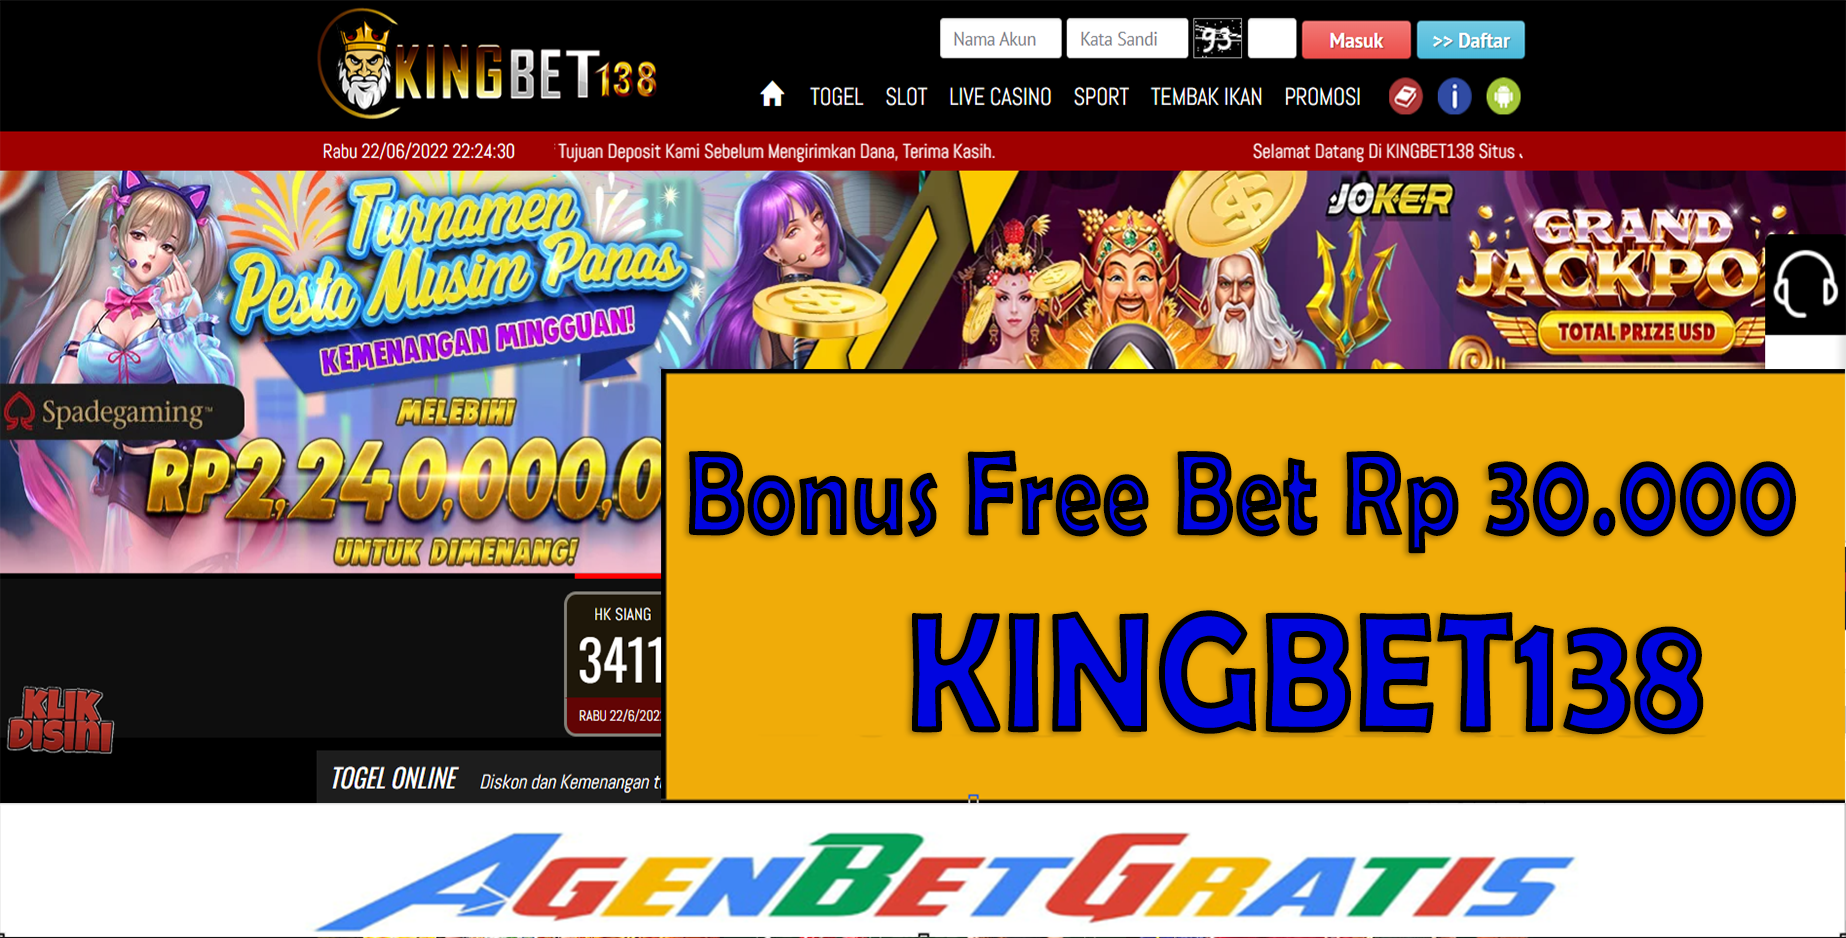 KINGBET138 - Bonus FreeBet 30.000